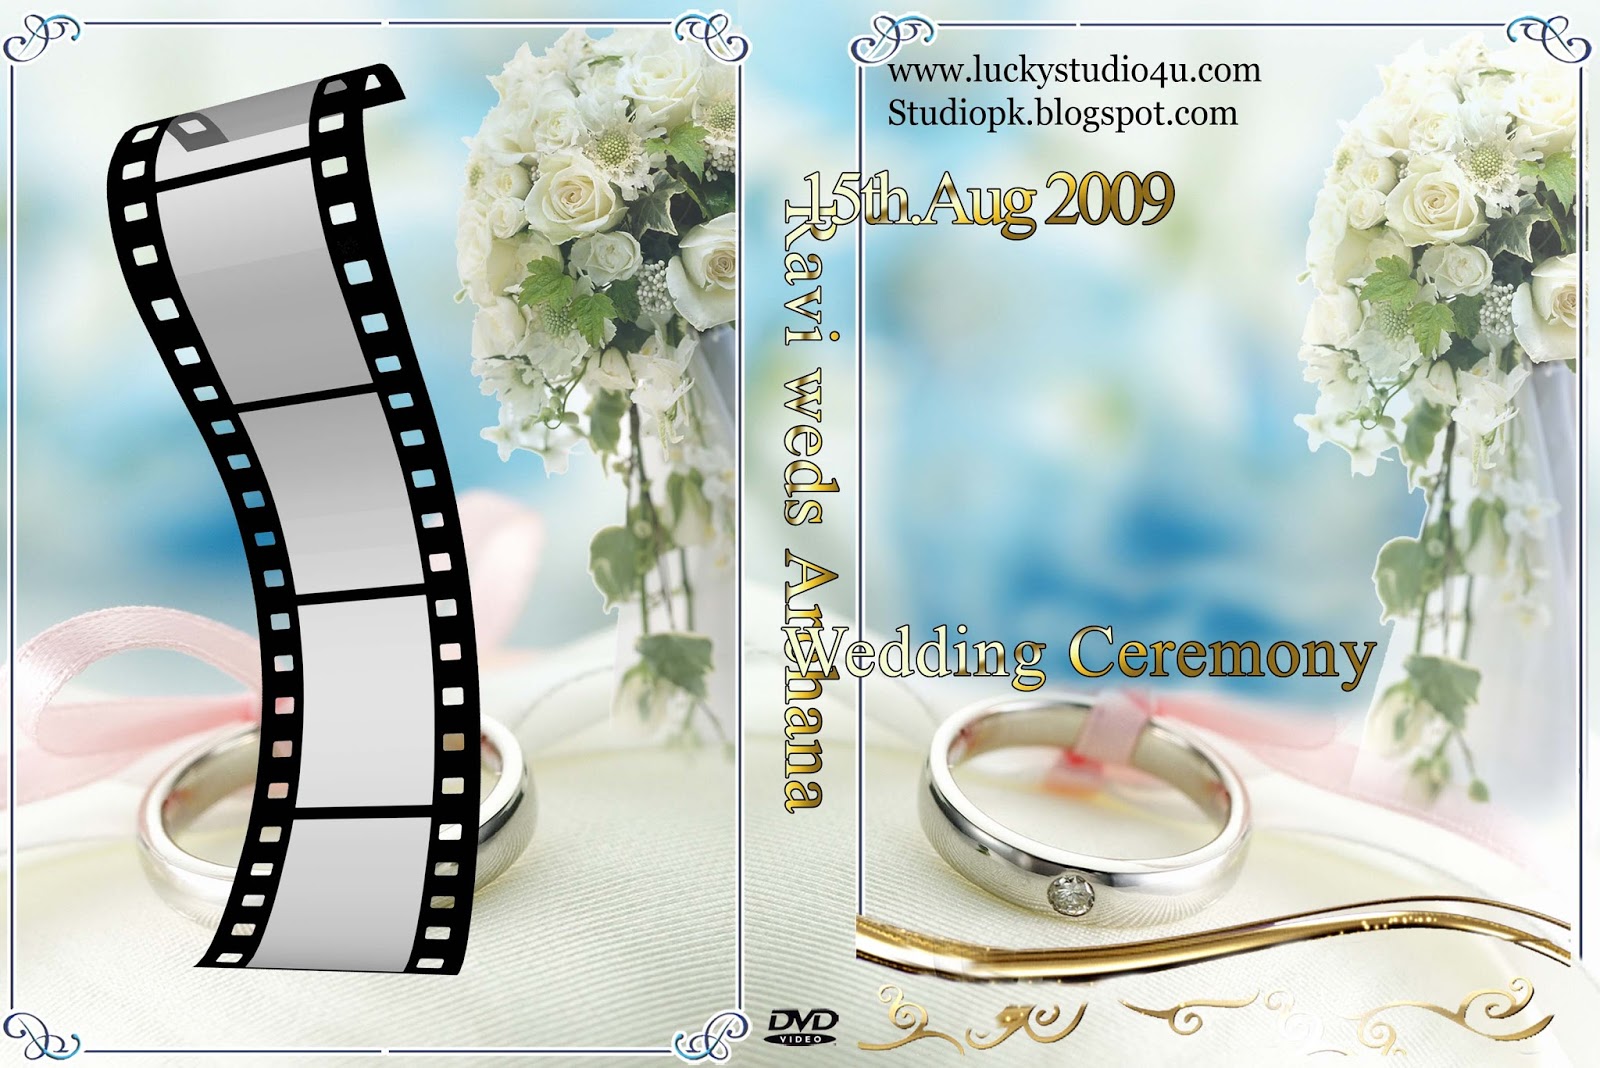 27 Wedding DVD Cover Psd Templates Free Download Wedding dvd, Wedding